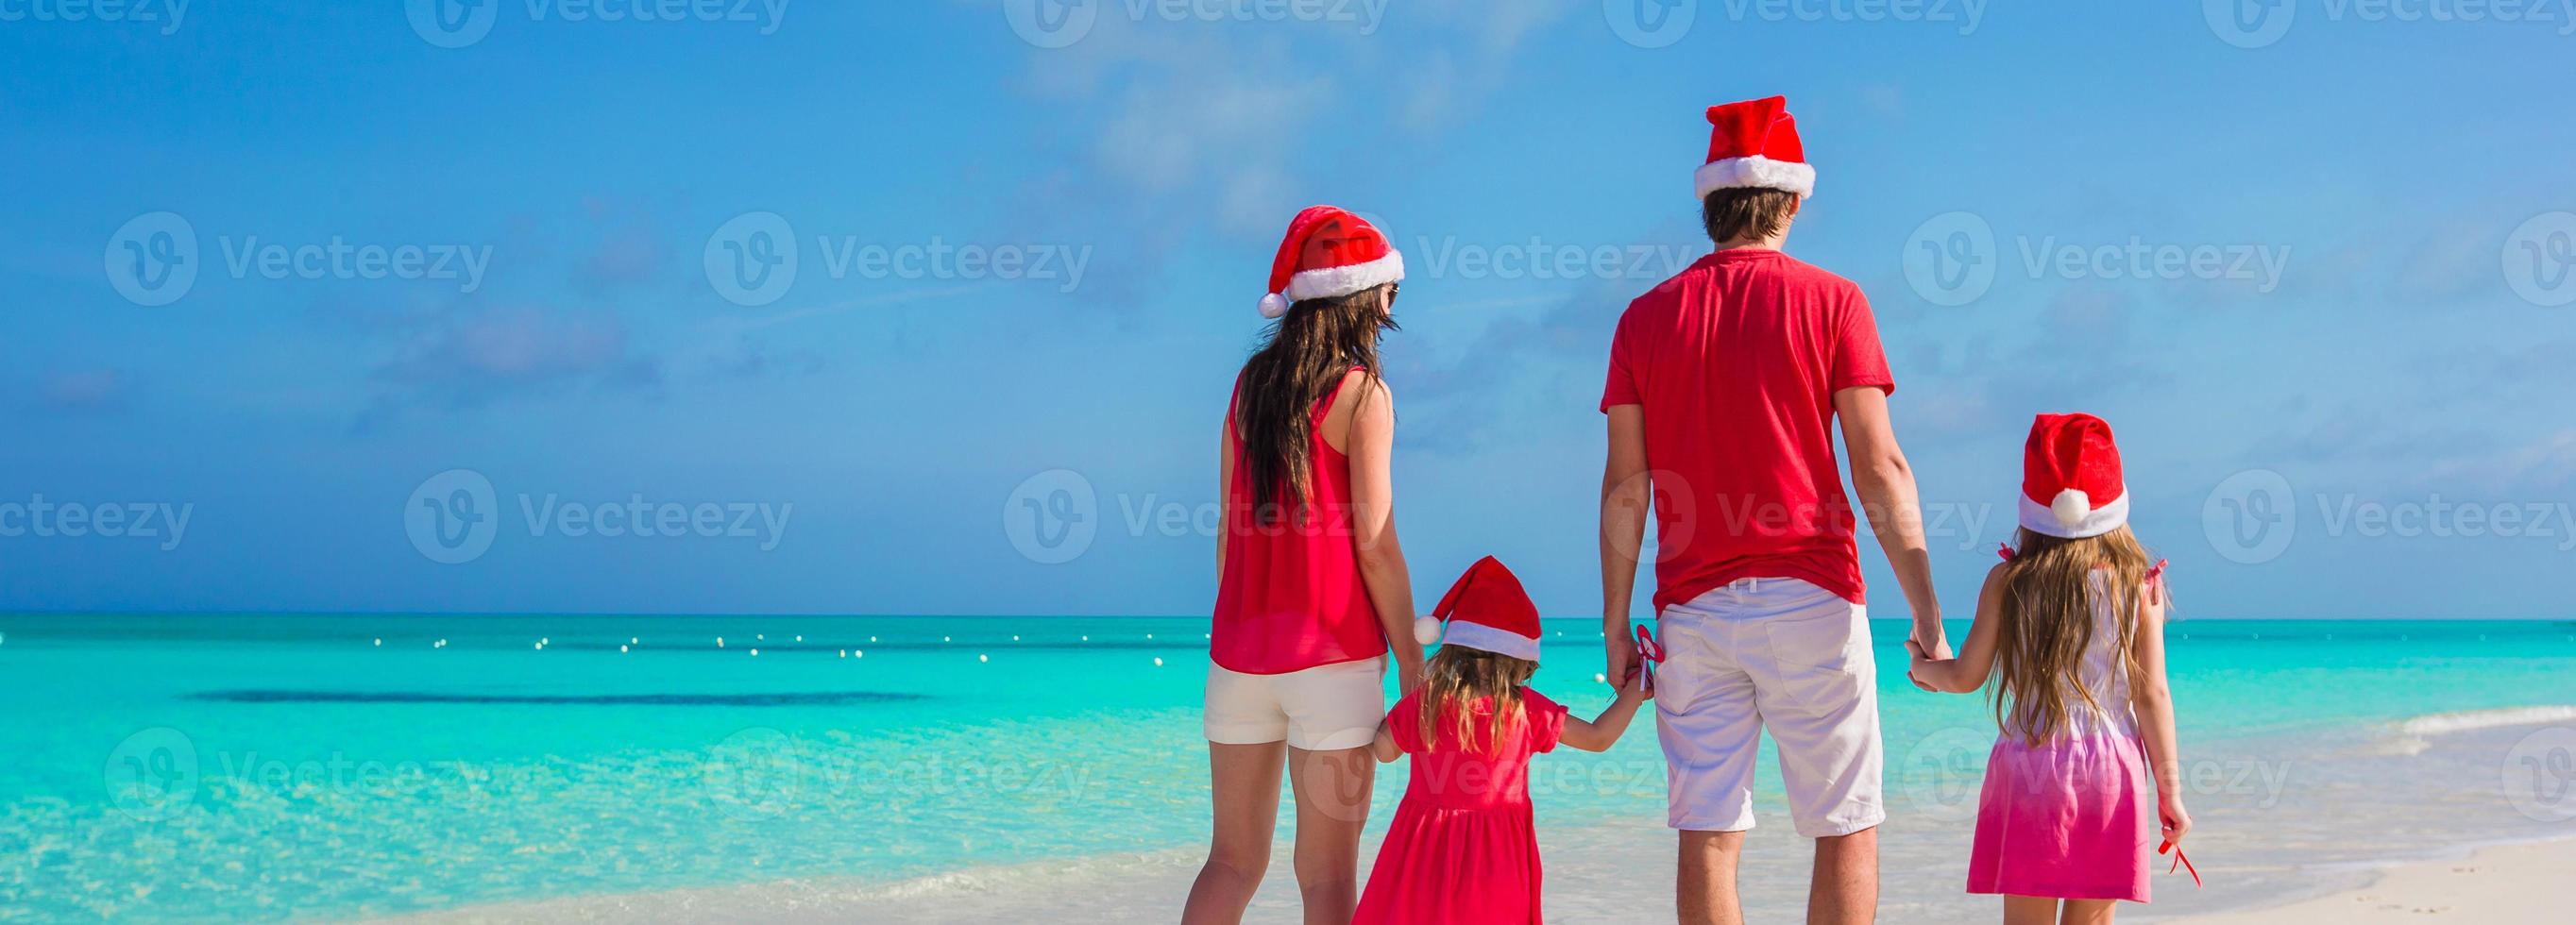 gelukkig familie van vier in Kerstmis hoeden Aan wit strand foto